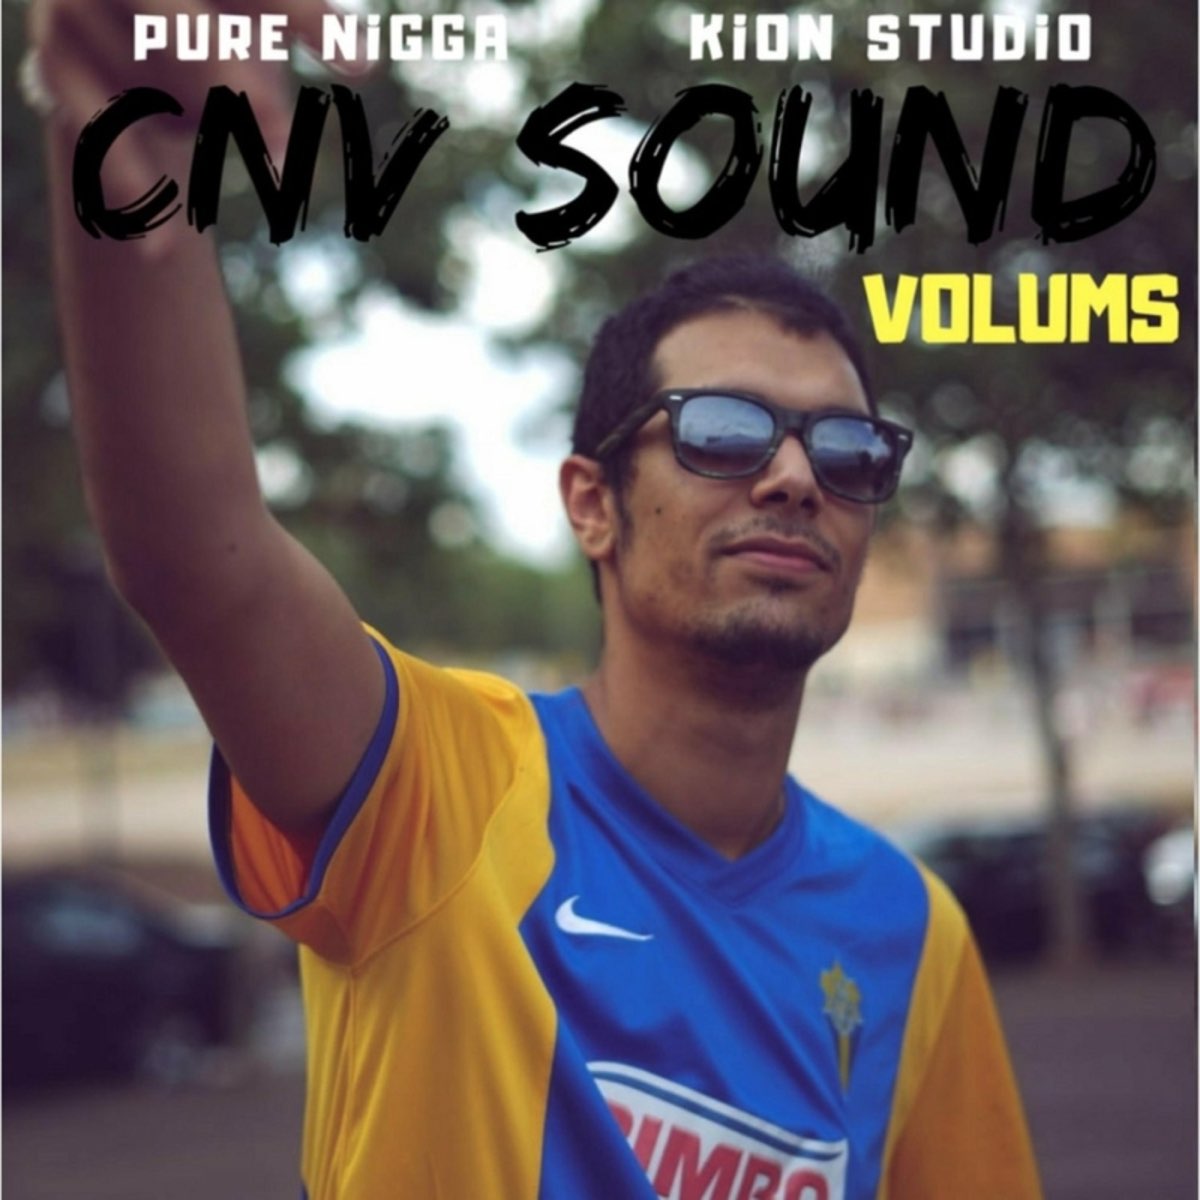 Pure negga skillz beatz vol 14. Pure Negga & Ziko. Pure Negga CNV Sound. CNV Sound, Vol. 14 Pure Negga. CNV Sound Vol 14.